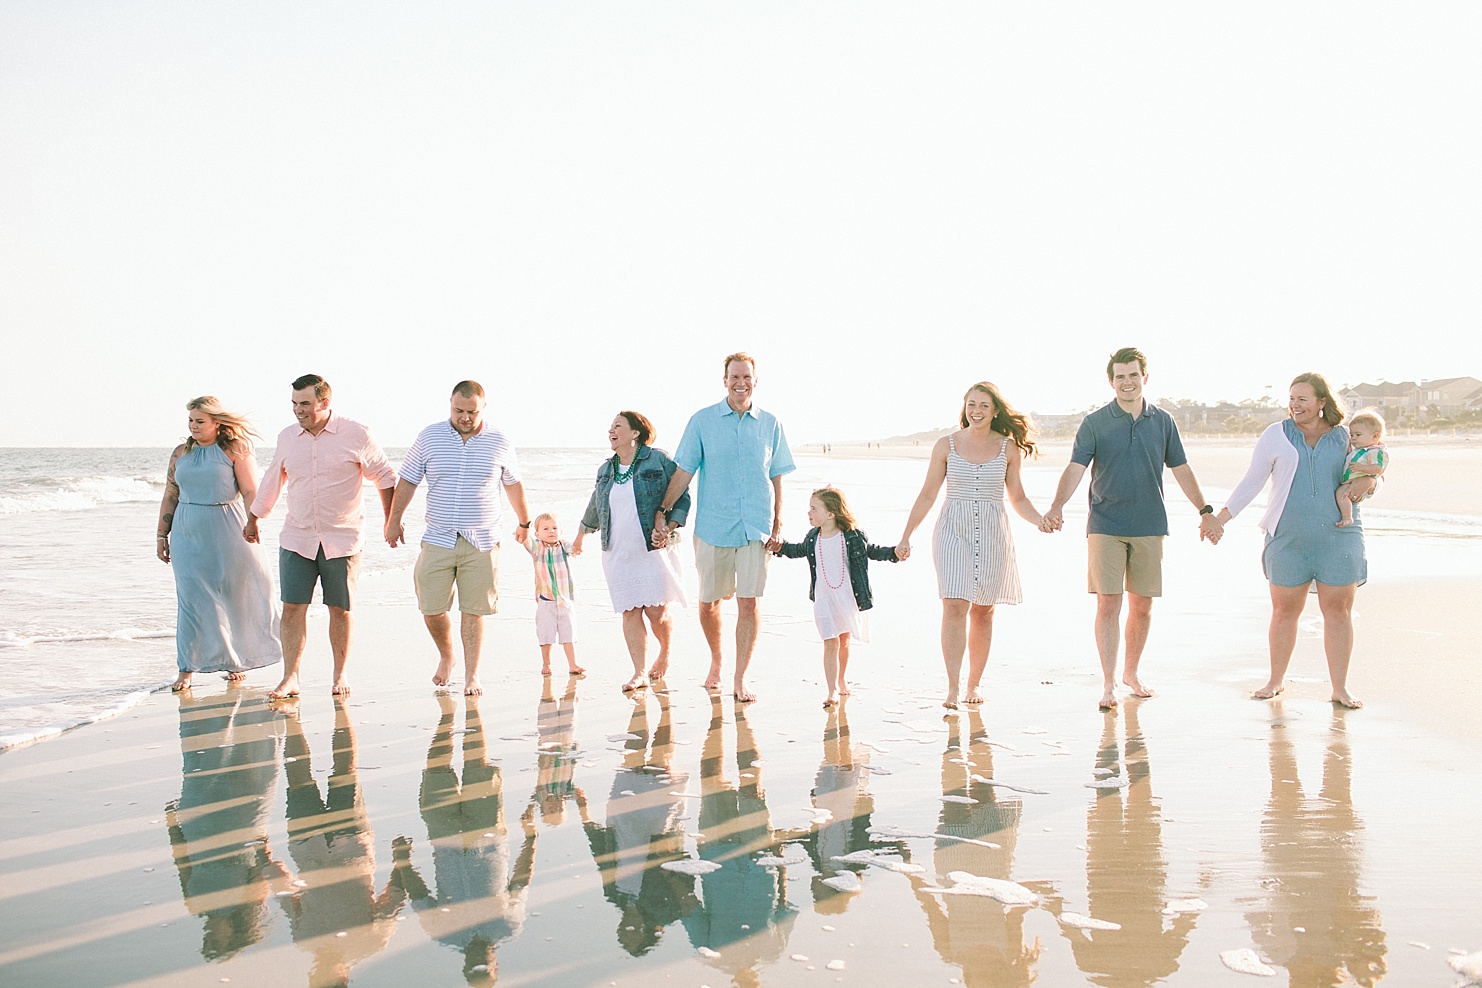 Big family walking on beach